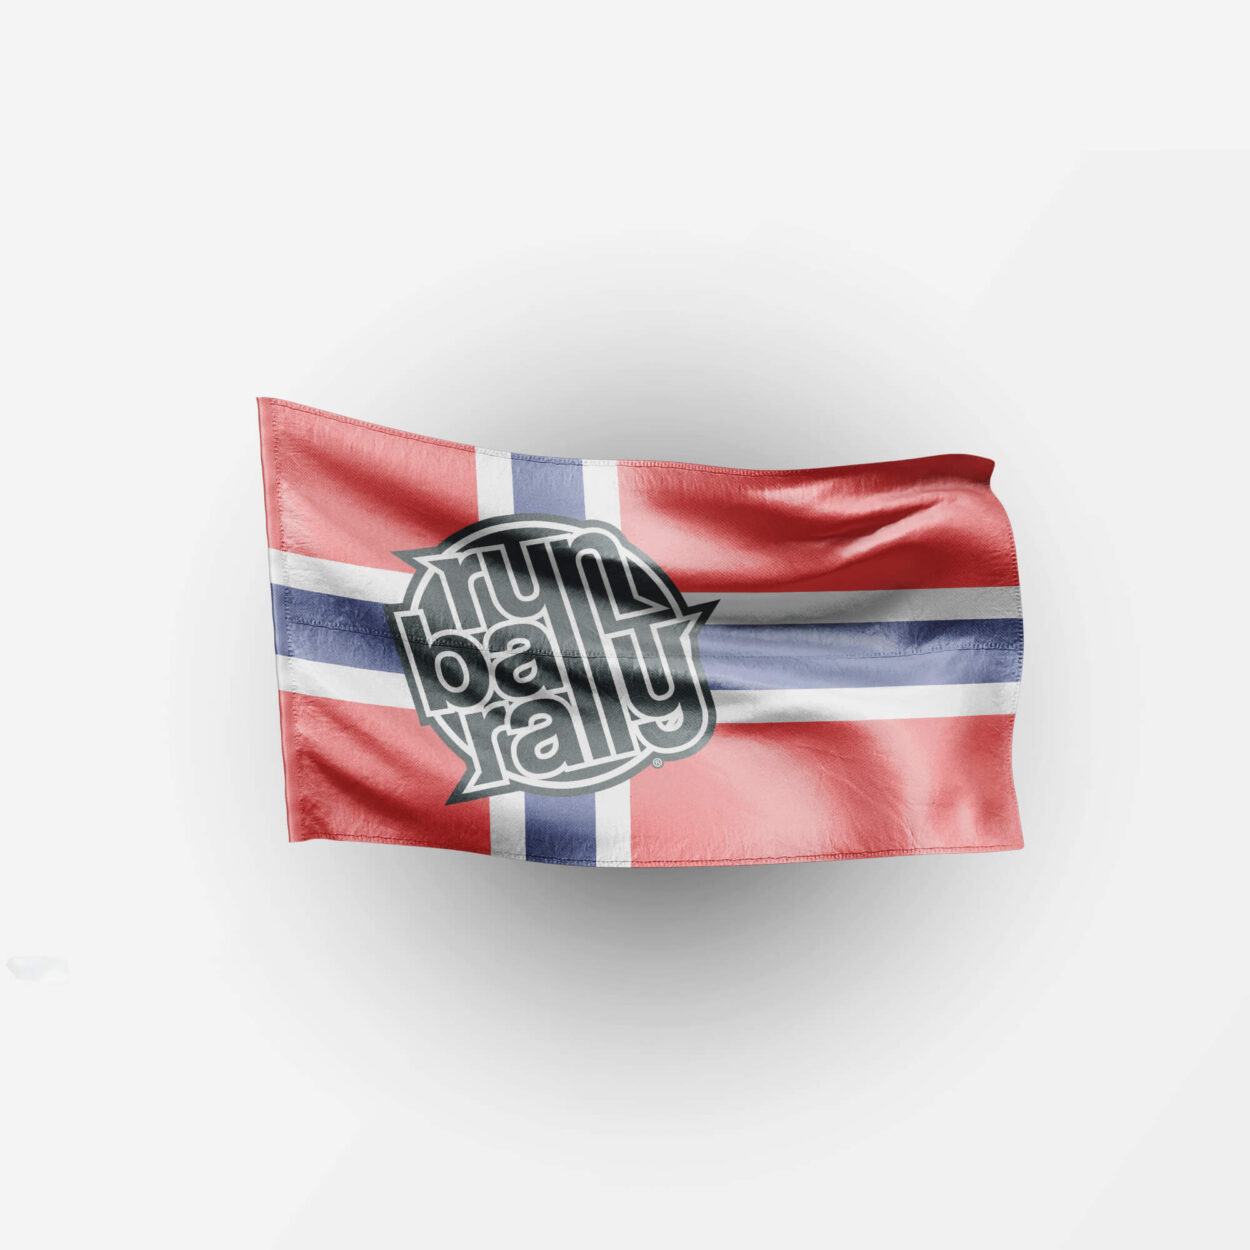 The Norwegian Runball flag